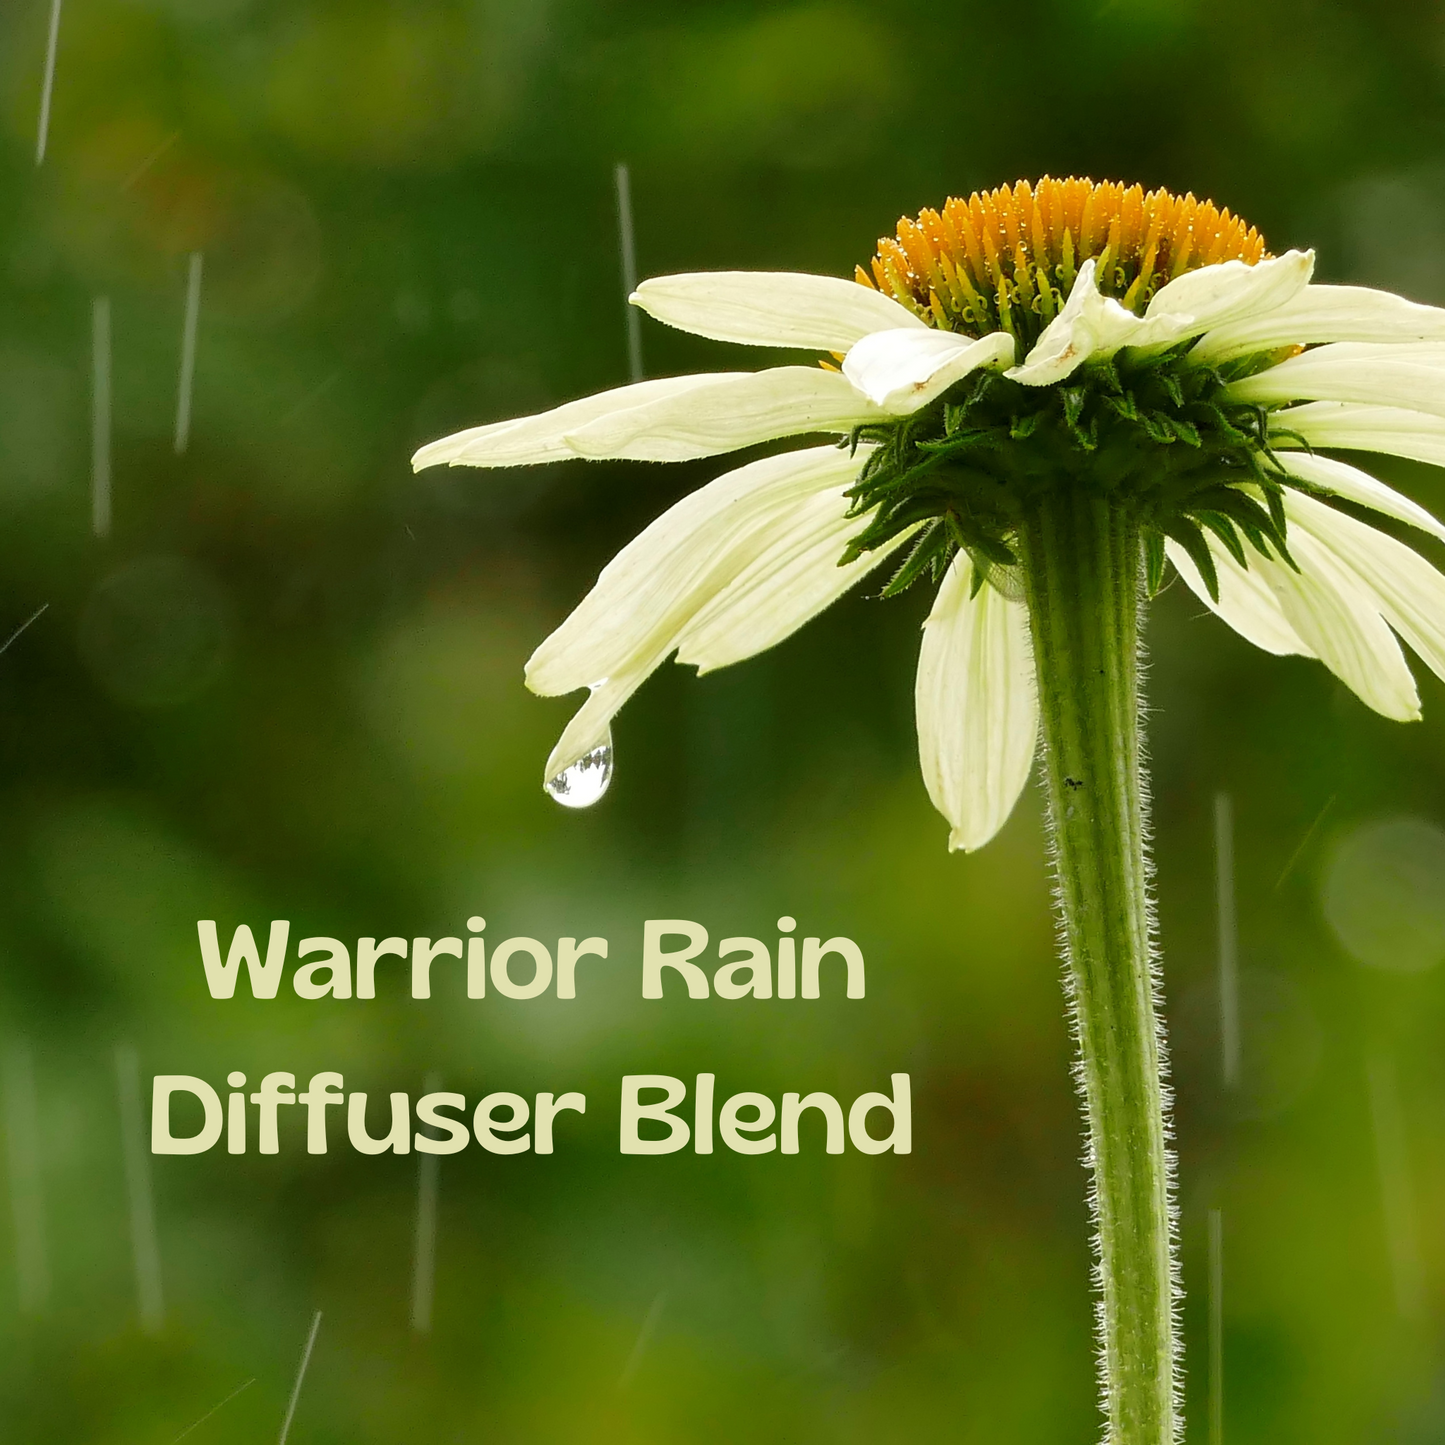 Warrior Rain Diffuser Blend